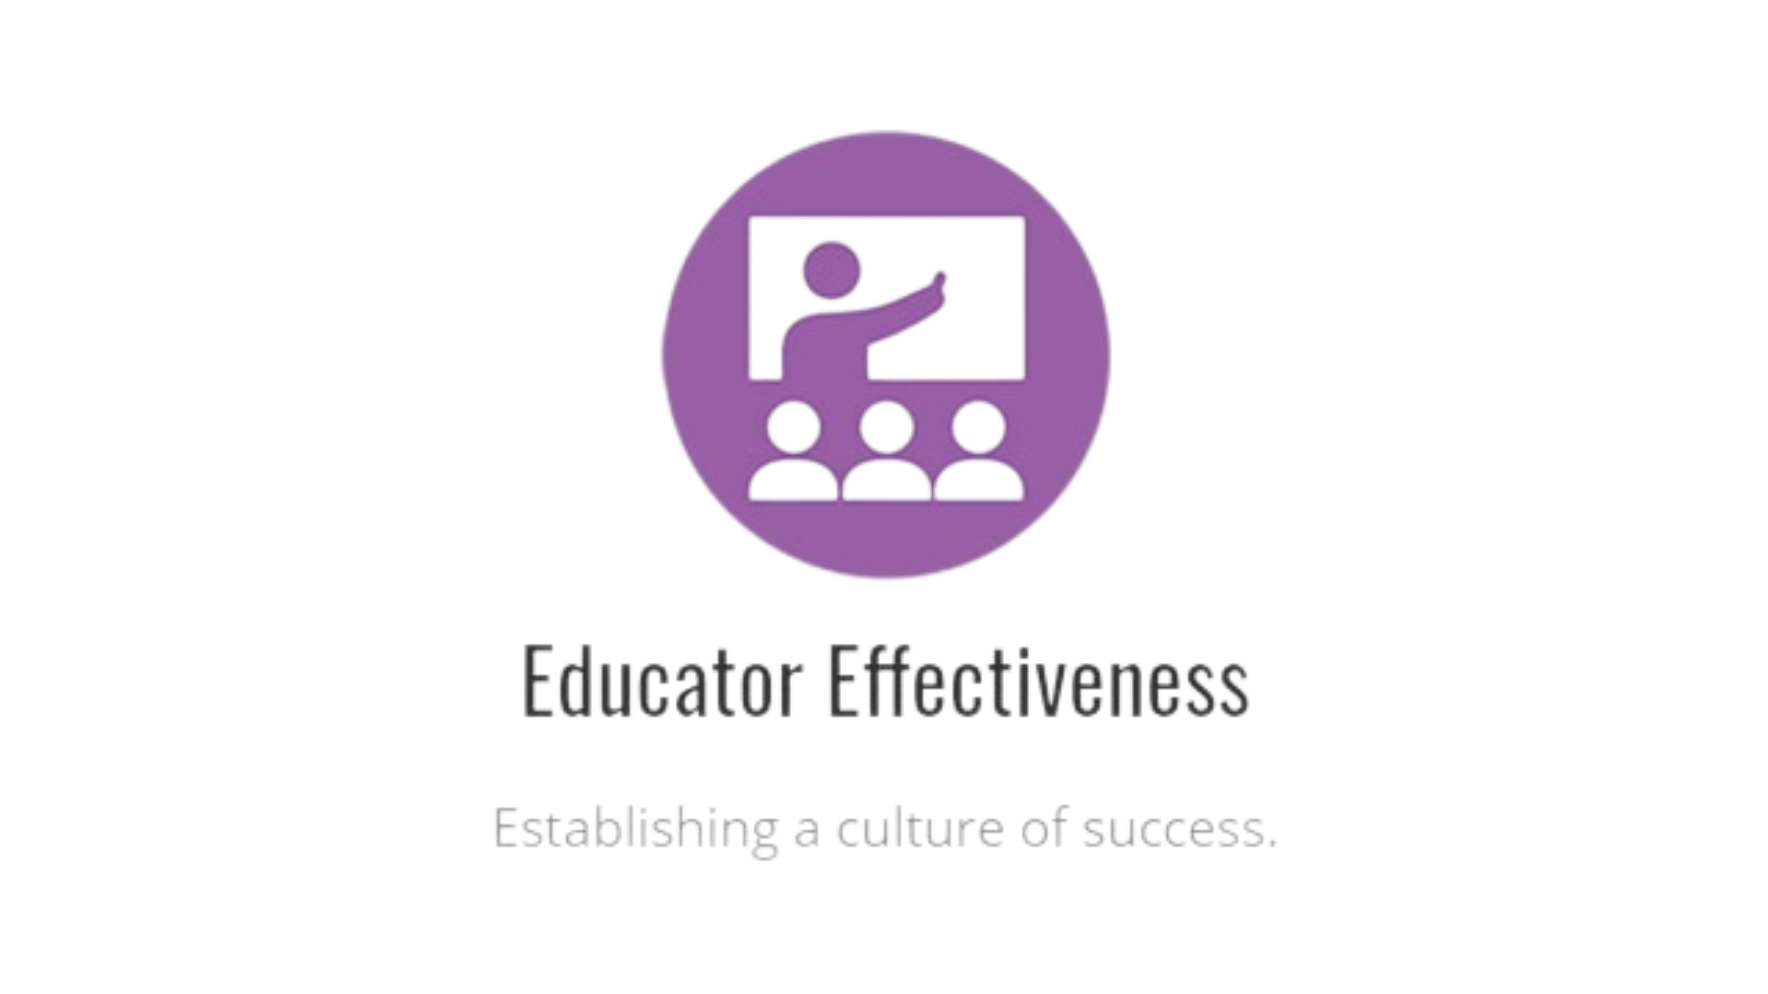 Educator Effectiveness Establishing a culture of success.